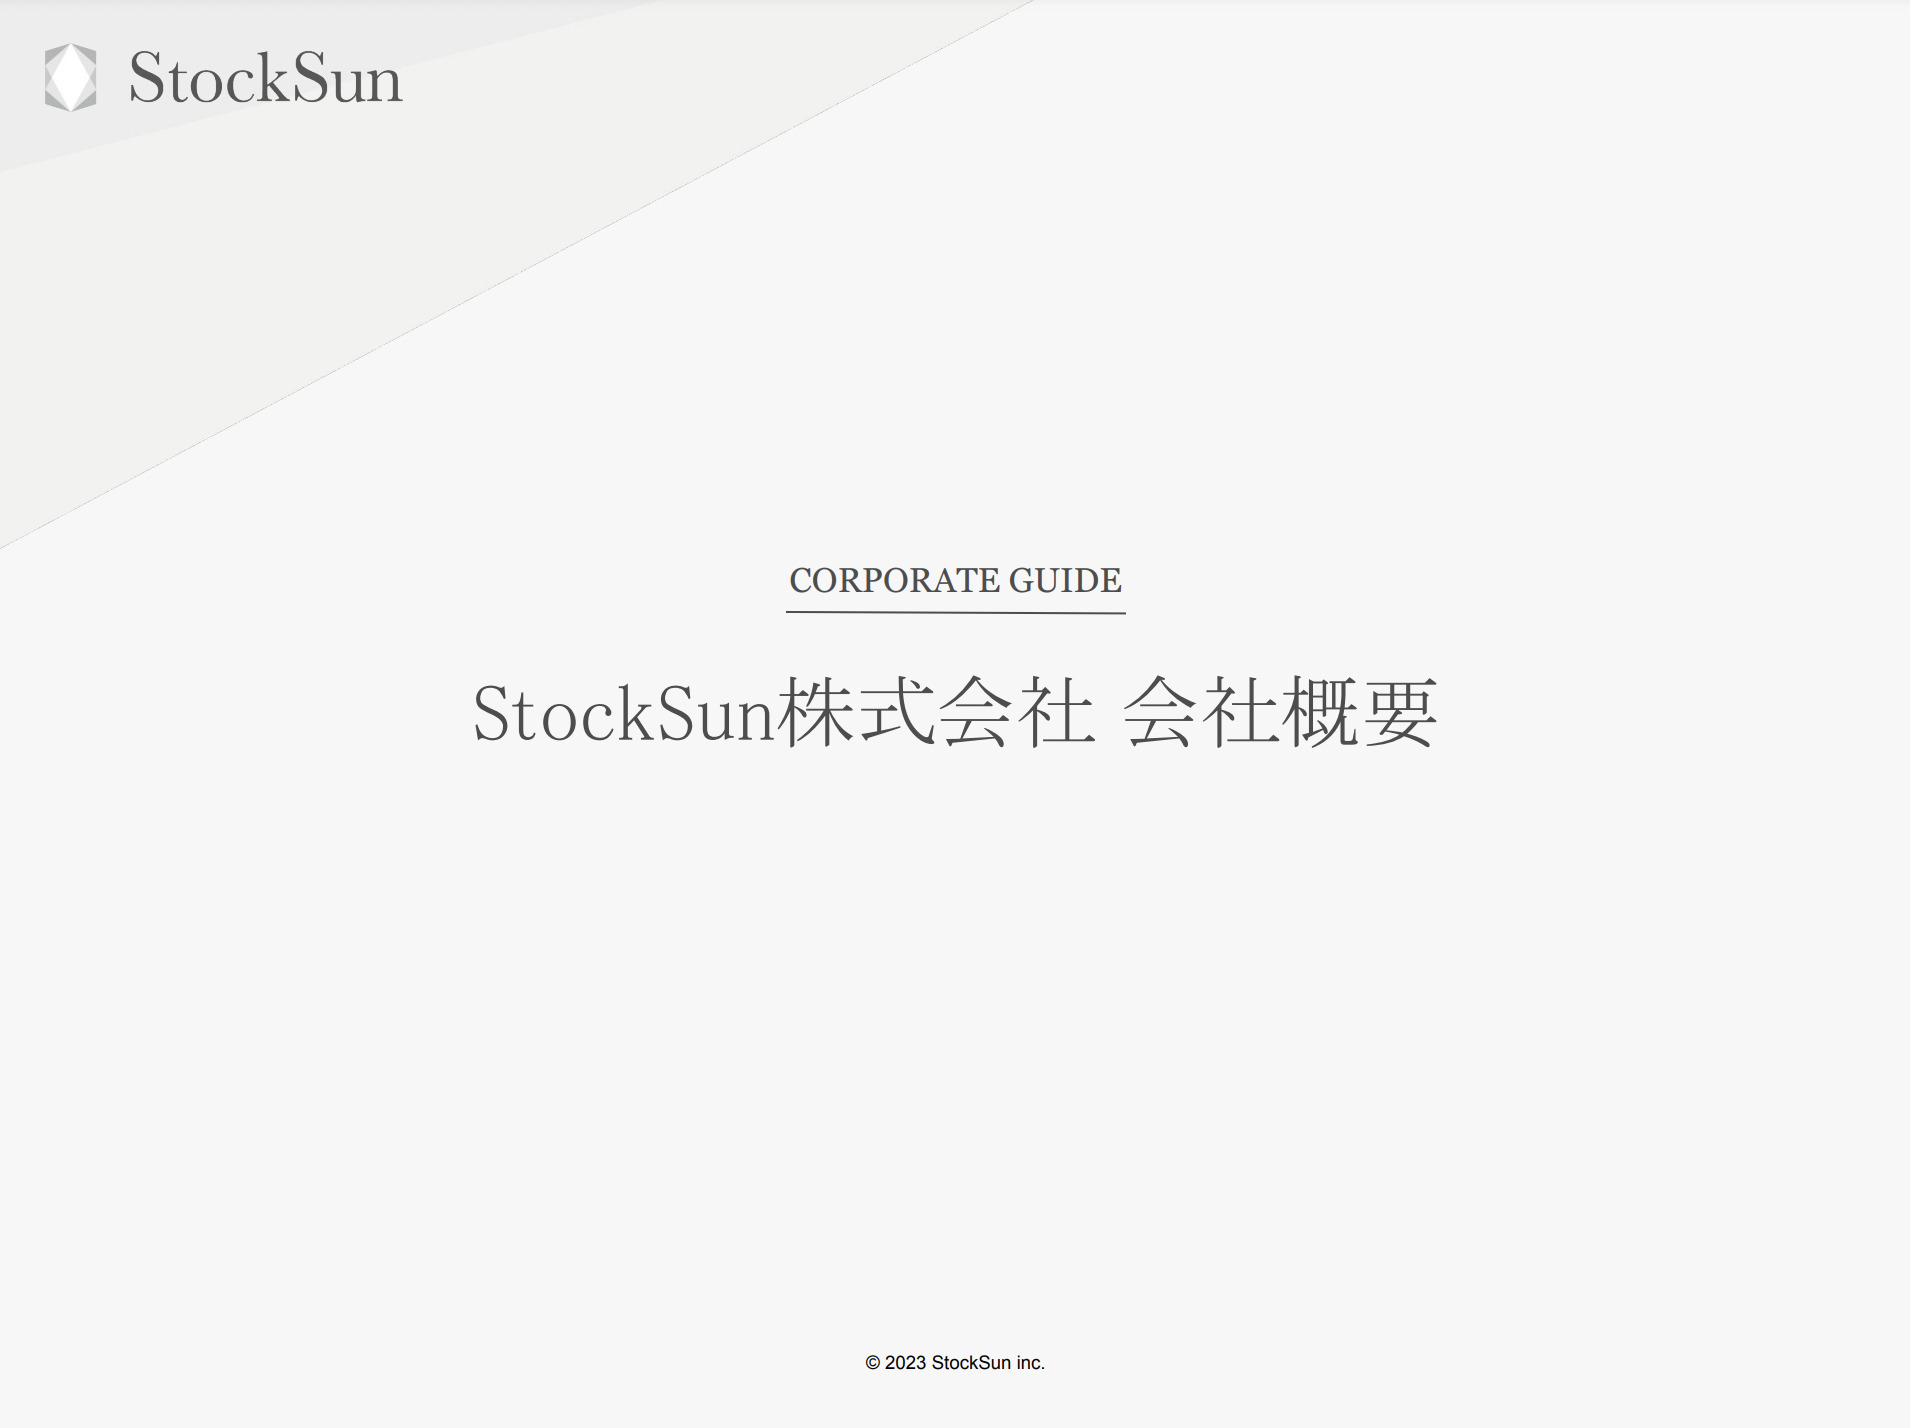 【StockSun株式会社】会社概要のダウンロードページ